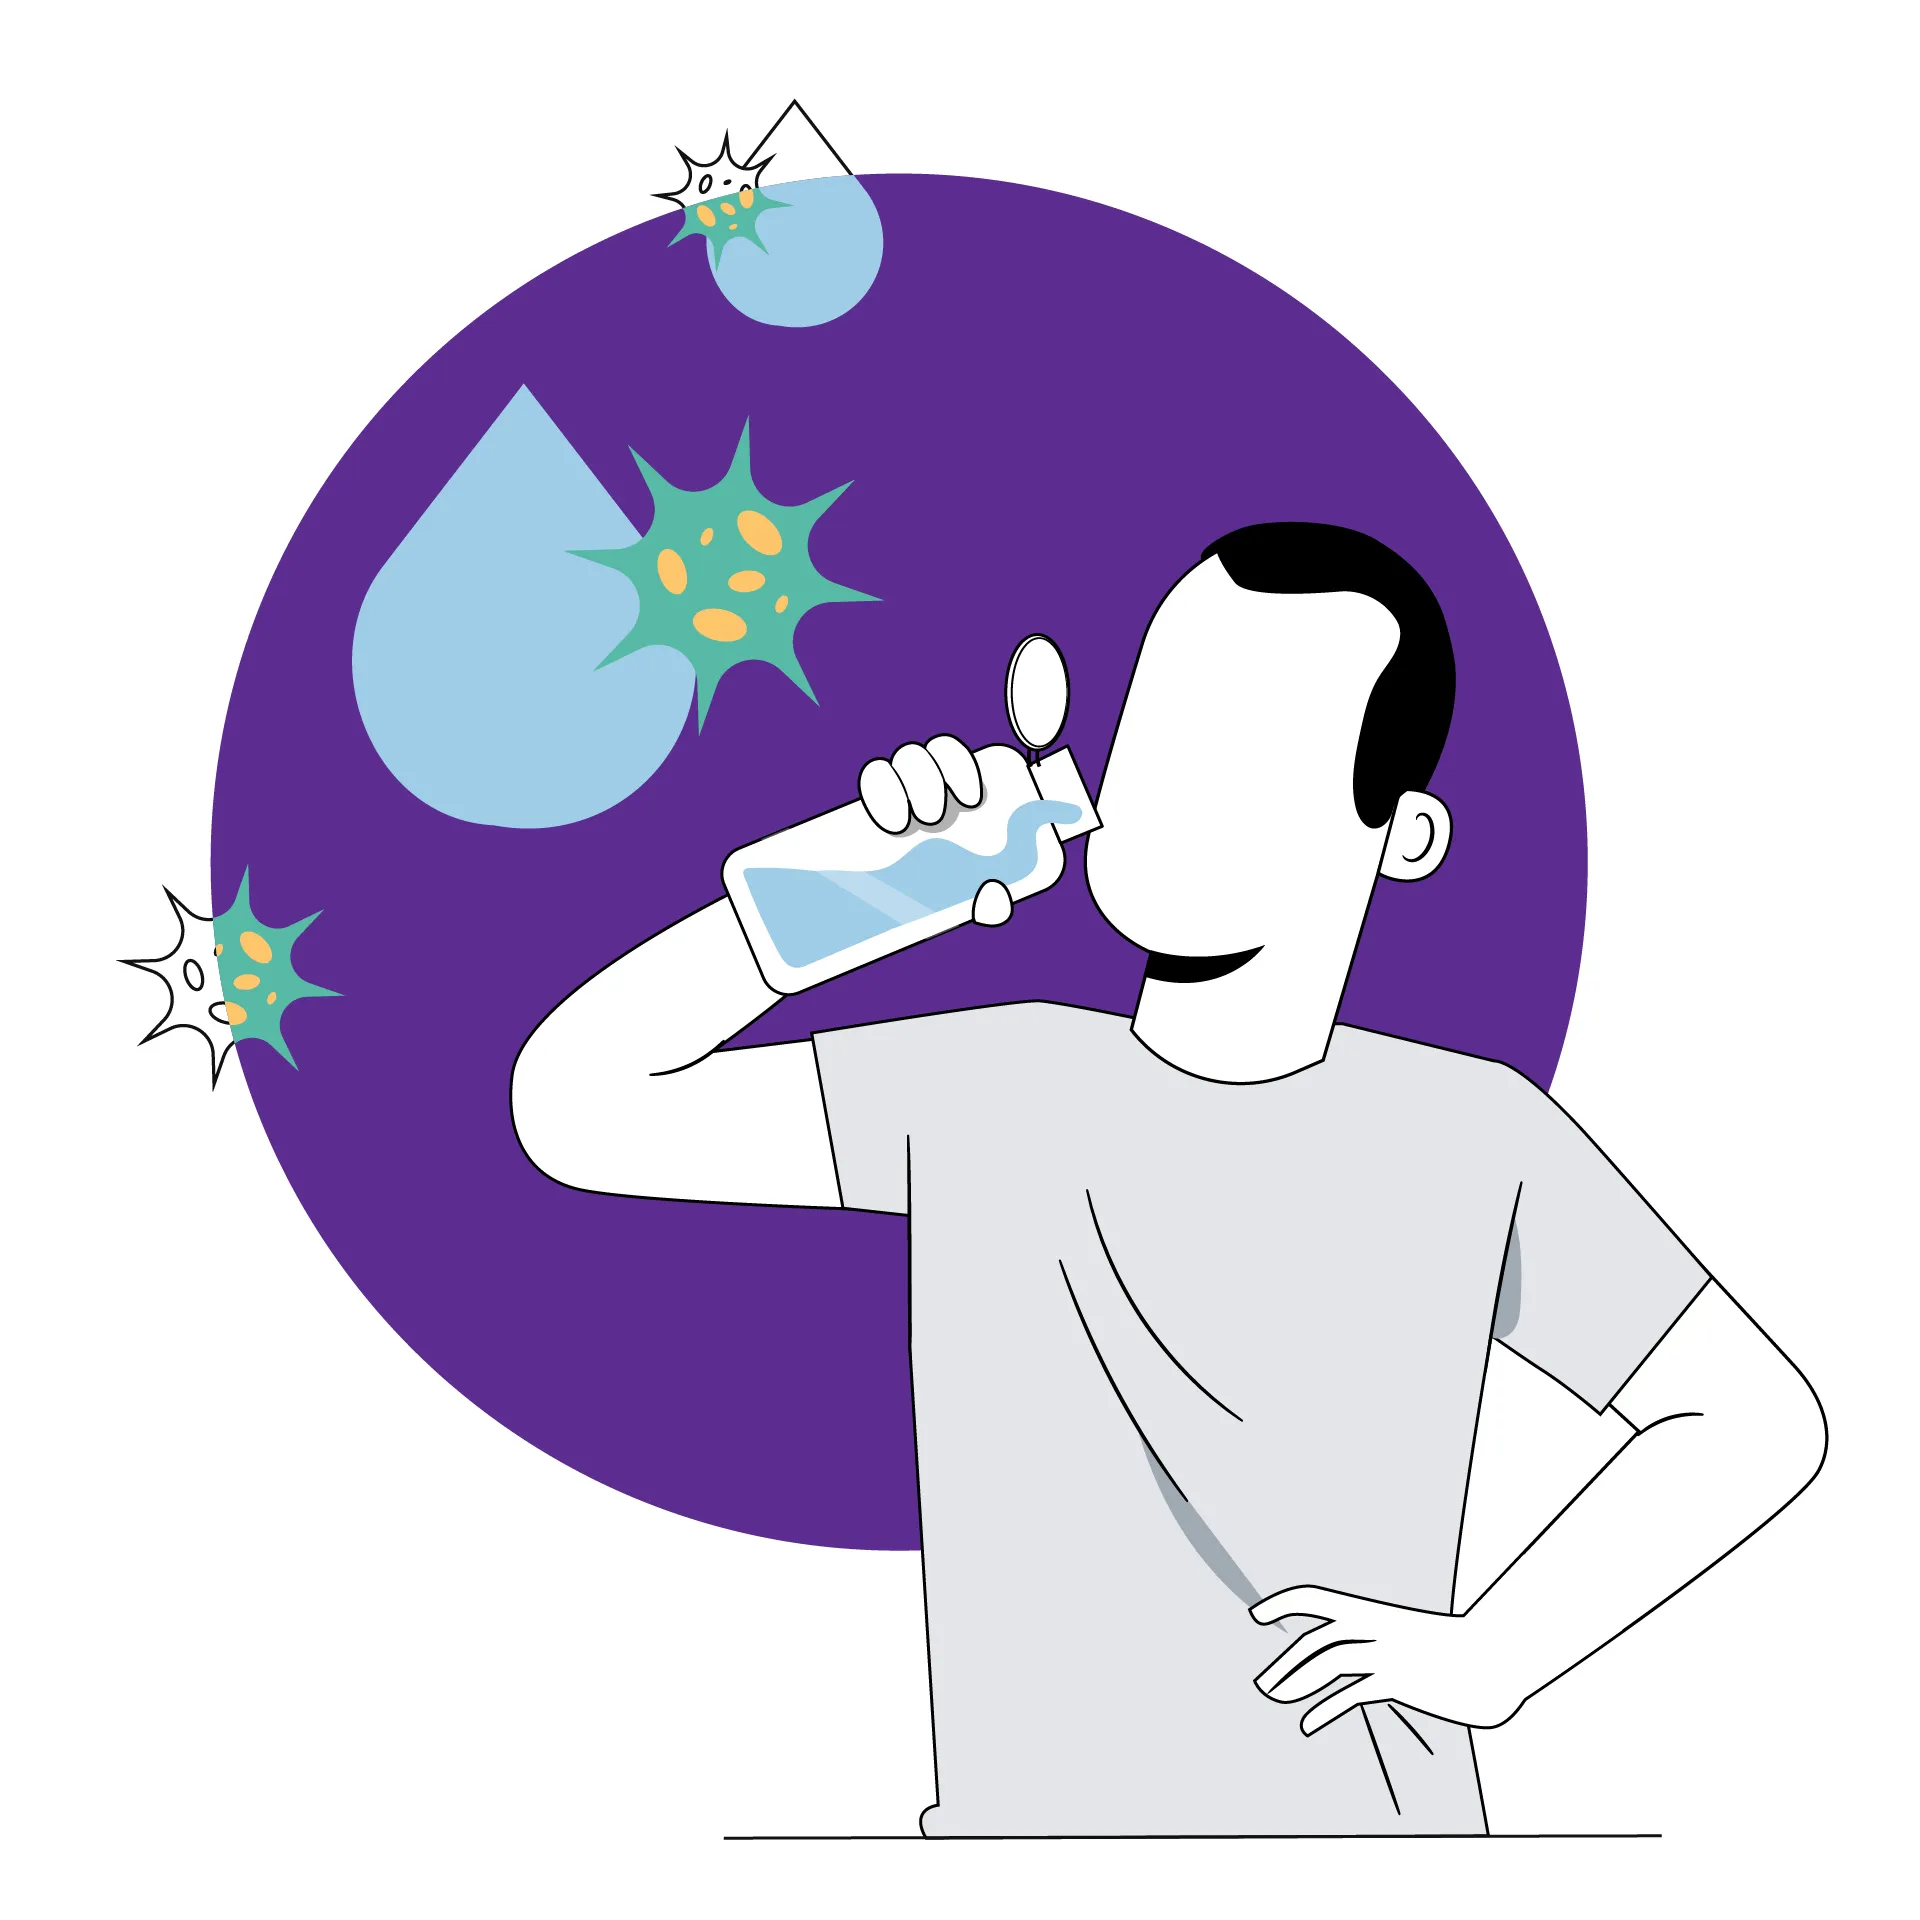 Waterborne Diseases: Symptoms and Prevention -17 illus